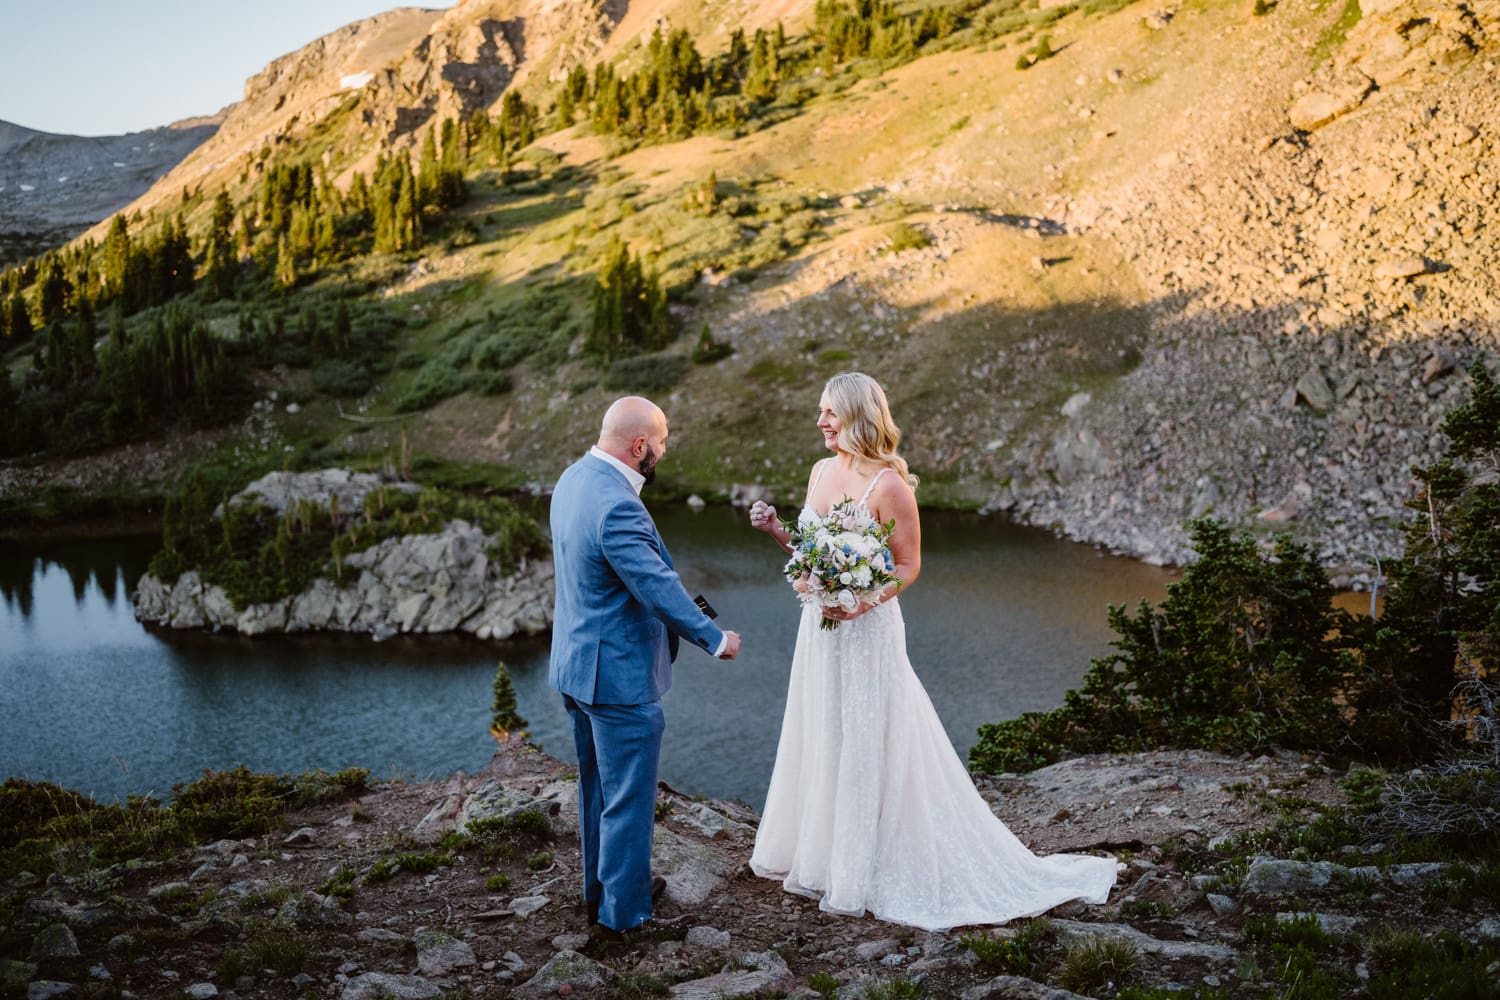 A couple sharing their vows at sunrise near an alpine lake in Buena Vista, Colorado.